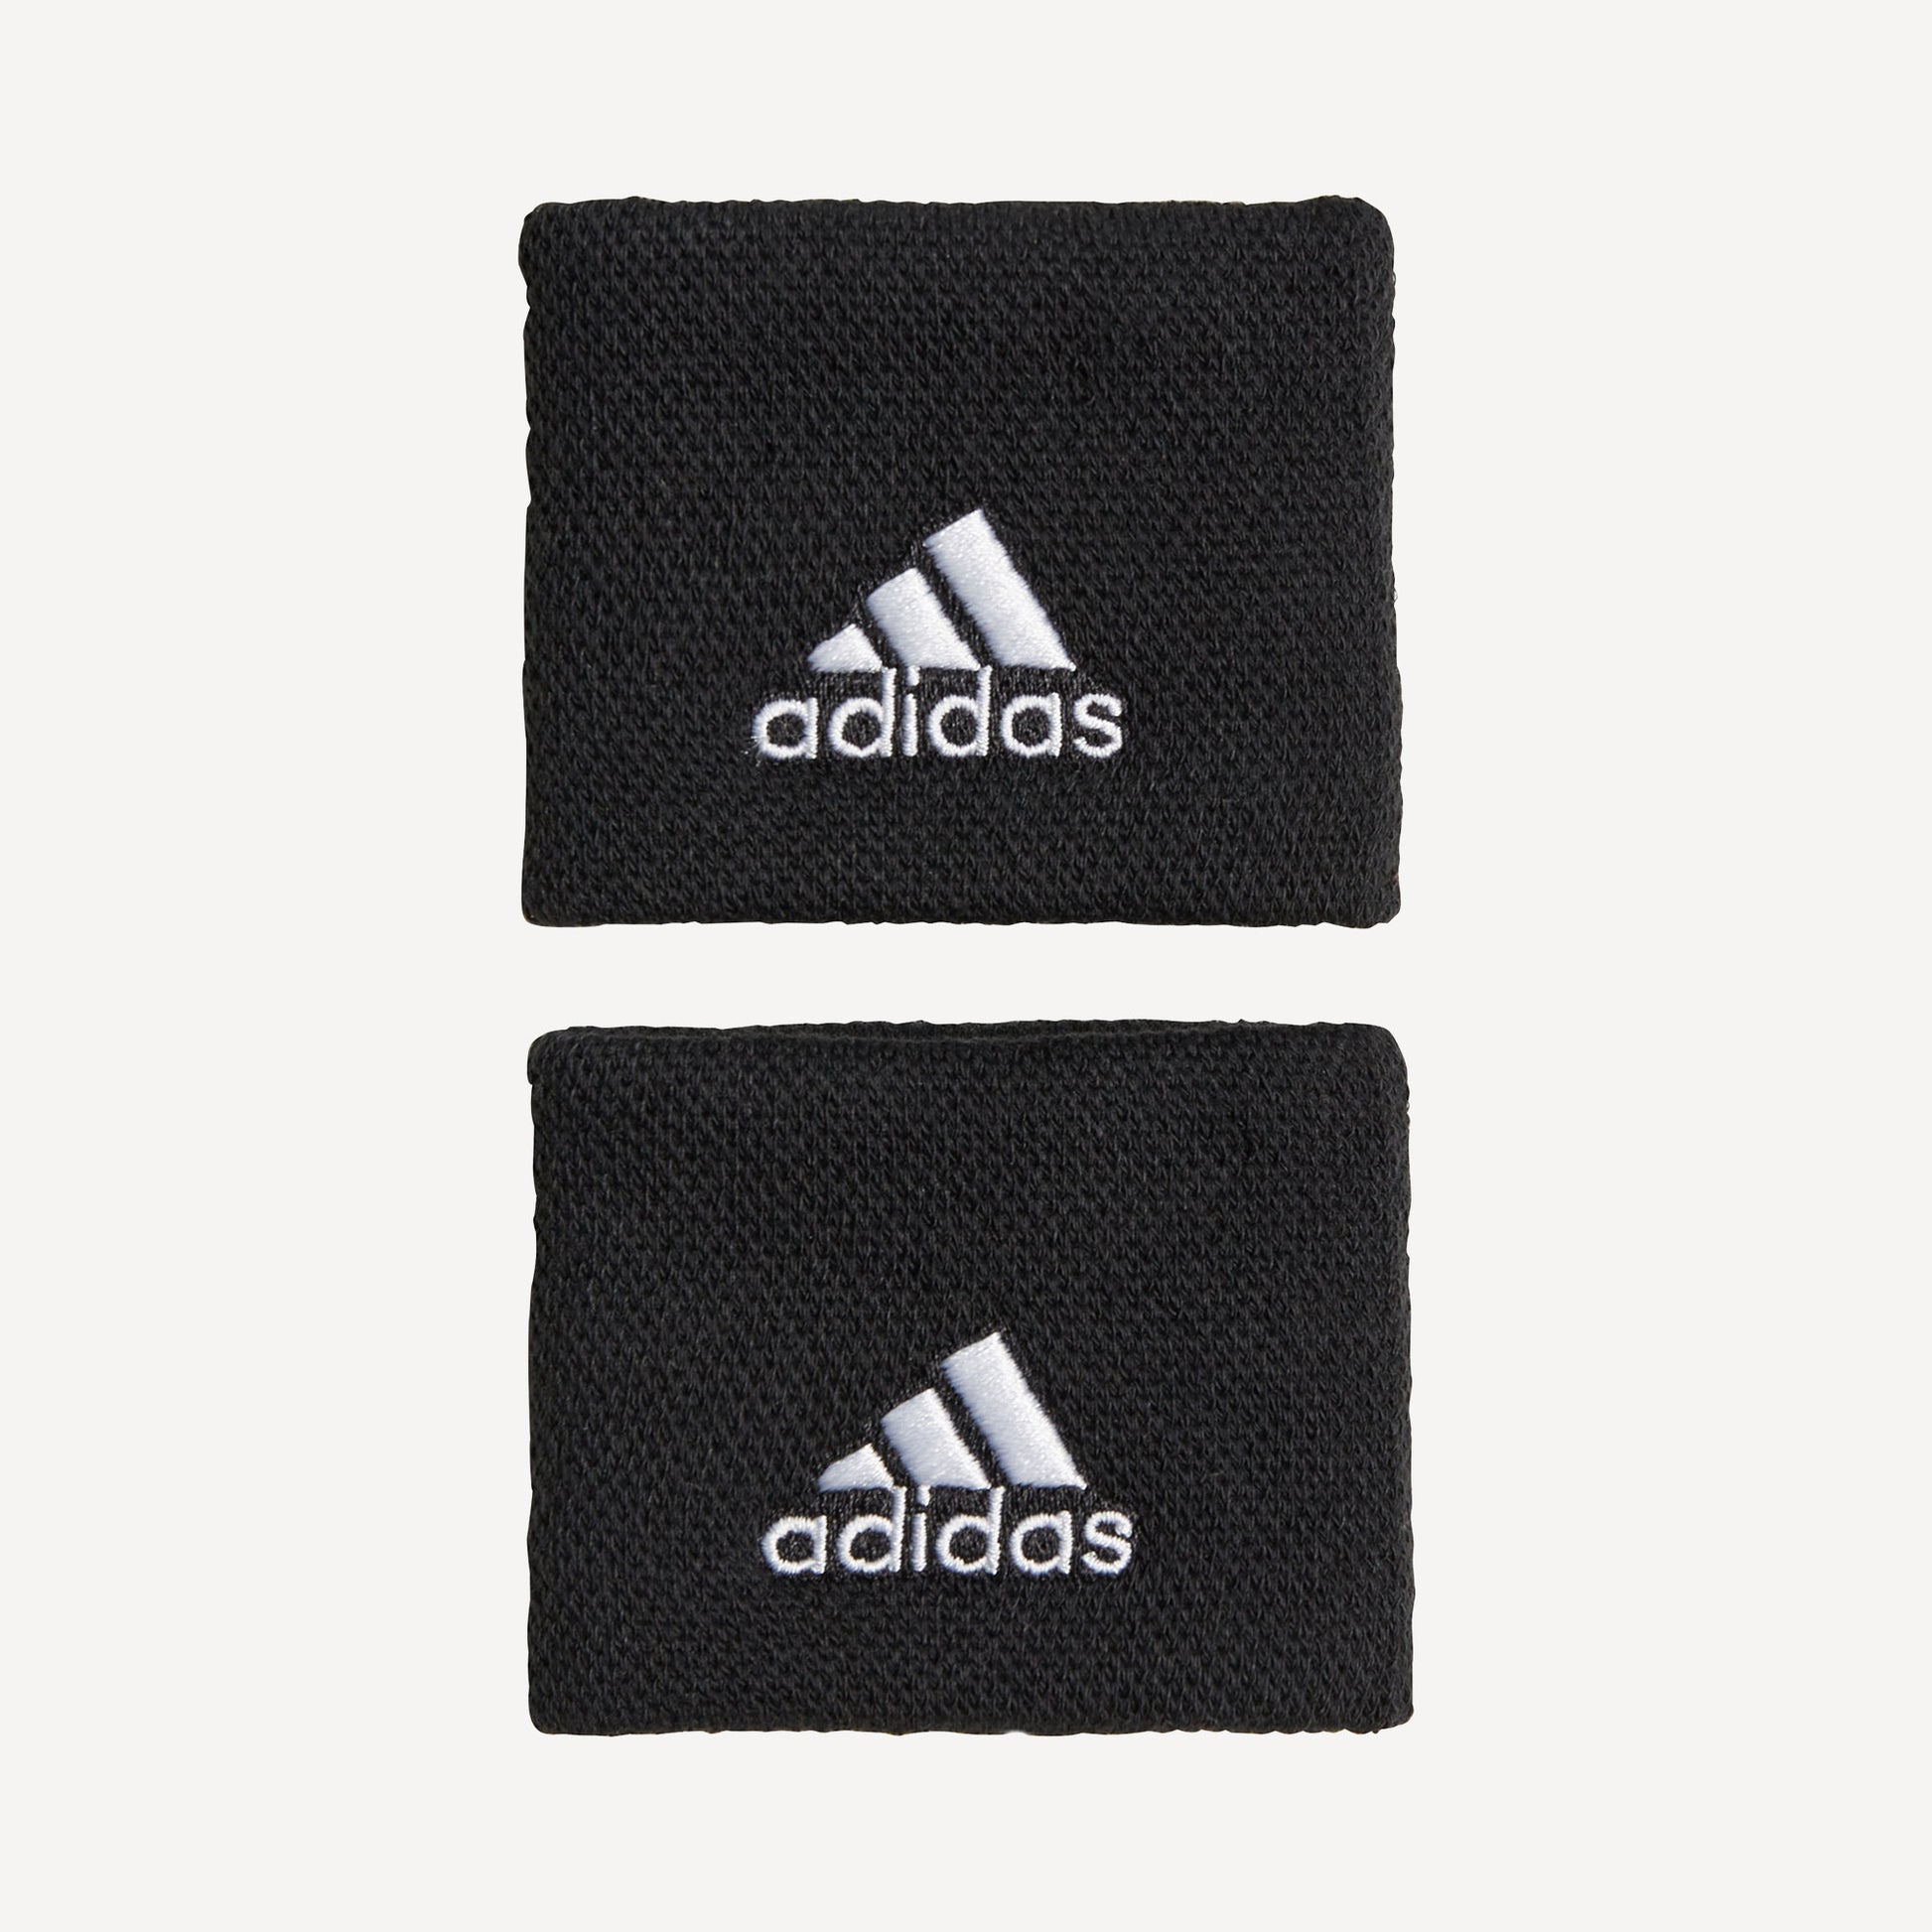 adidas Tennis Wristbands Small Black (1)